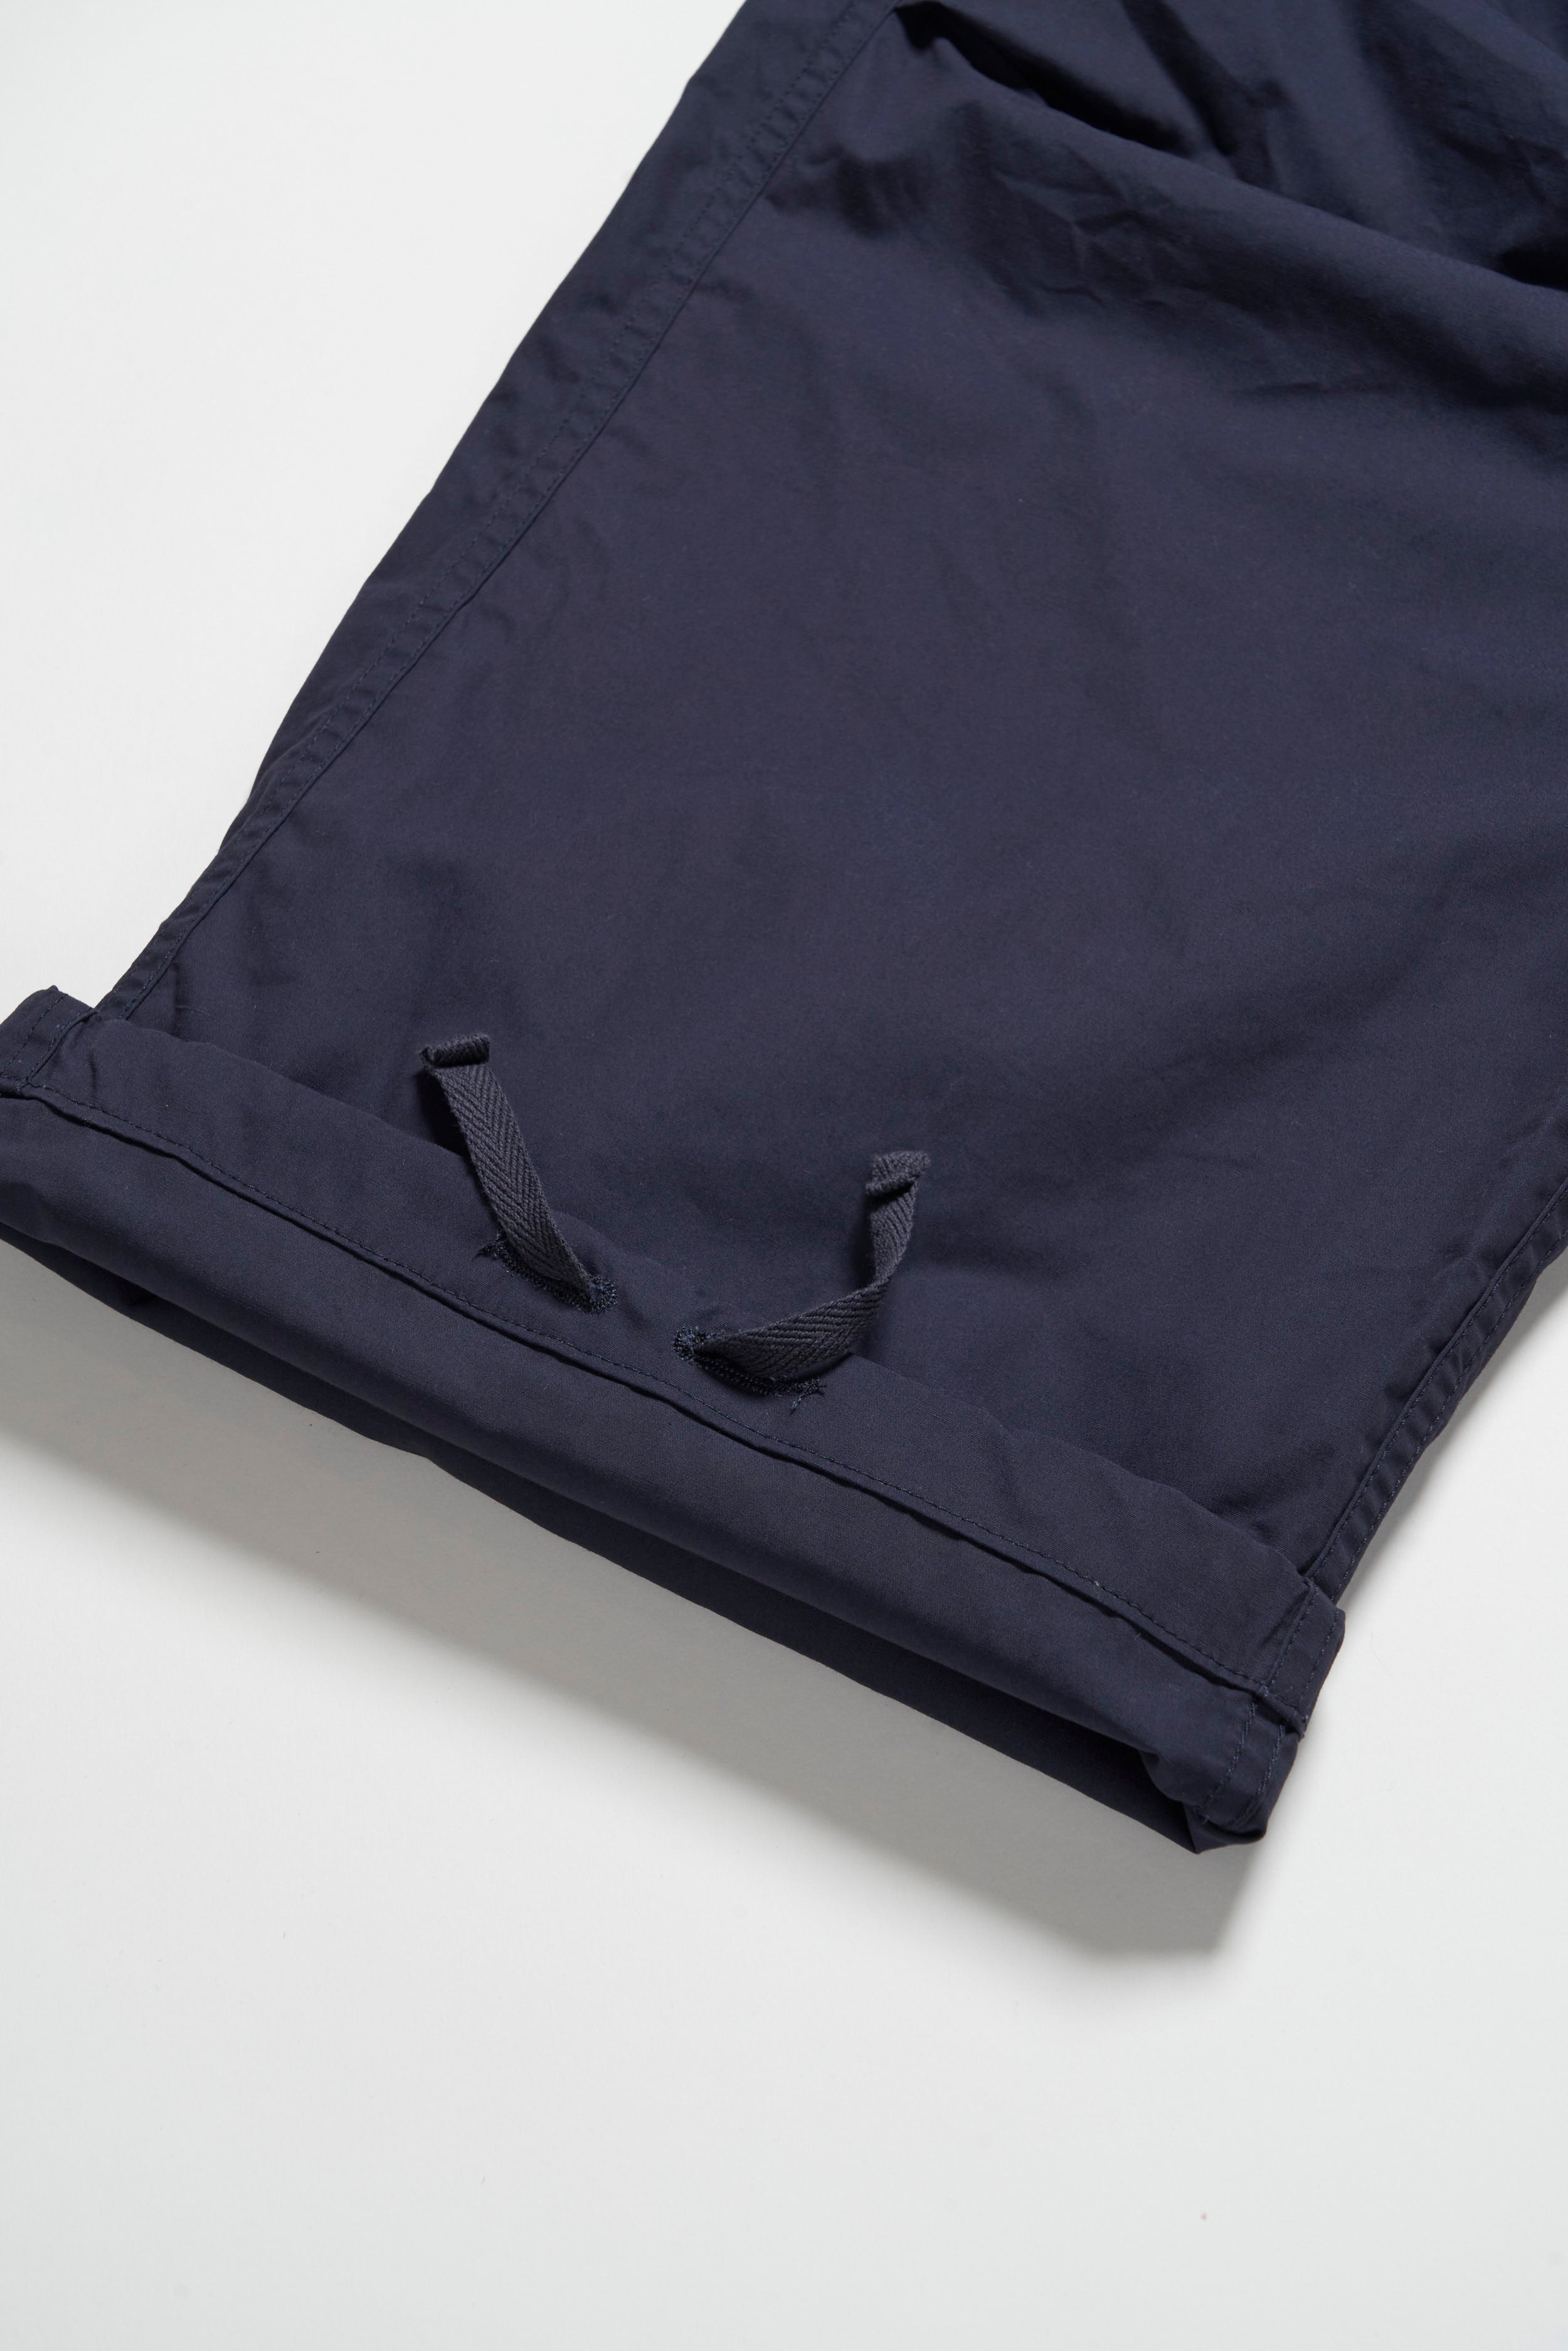 Engineered Garments Over Pant - Navy Cotton Duracloth Poplin